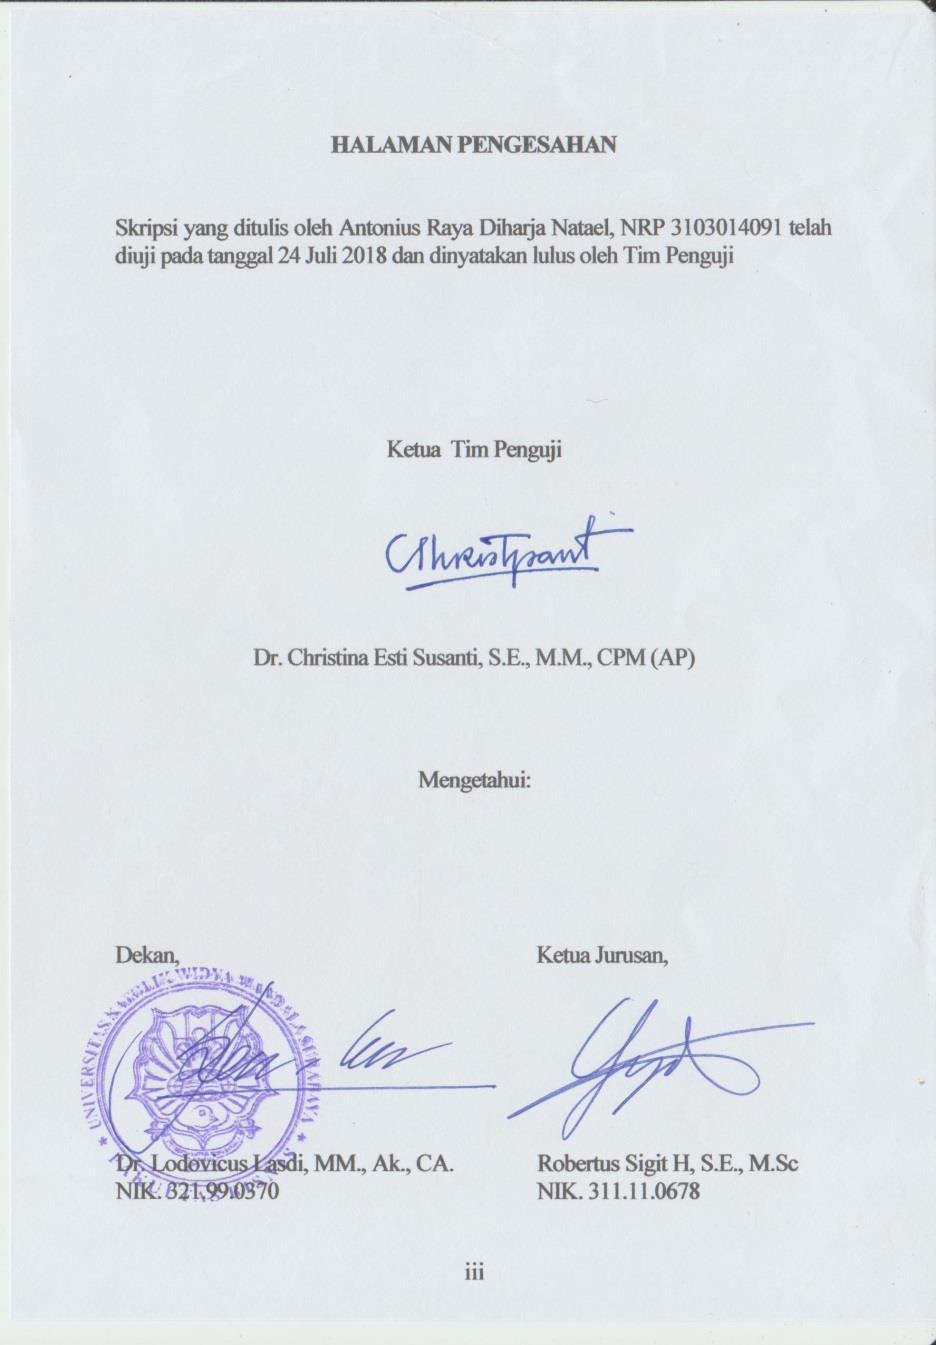 HALAMAN PENGESAHAN Skripsi yang telah ditulis oleh Antonius Raya Diharja Natael dengan NRP 3103014091 telah diuji pada tanggal dan dinyatakan lulus